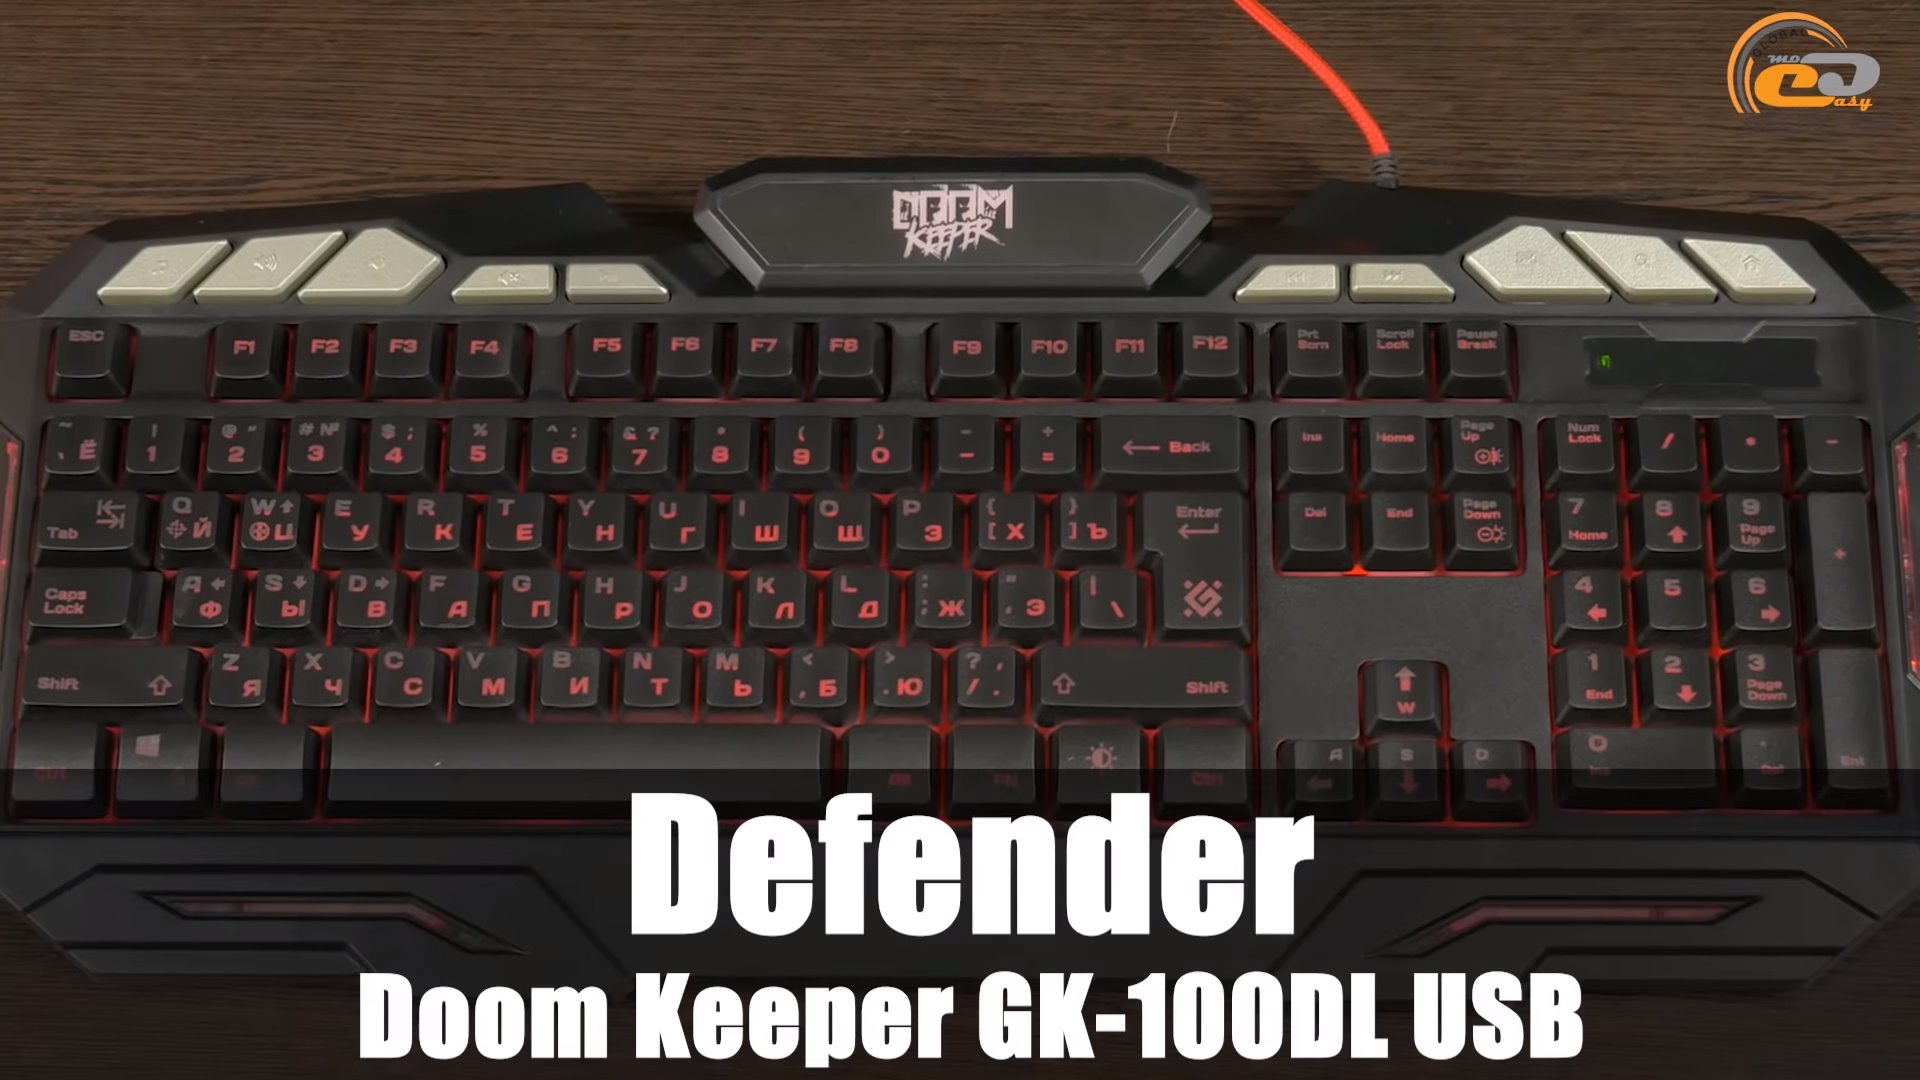 Defender doom keeper. Клавиатура Doom Keeper. Клавиатура Defender Doom Keeper. Defender Doom Keeper GK-100dl. Раскладка клавиатуры Doom Keeper.